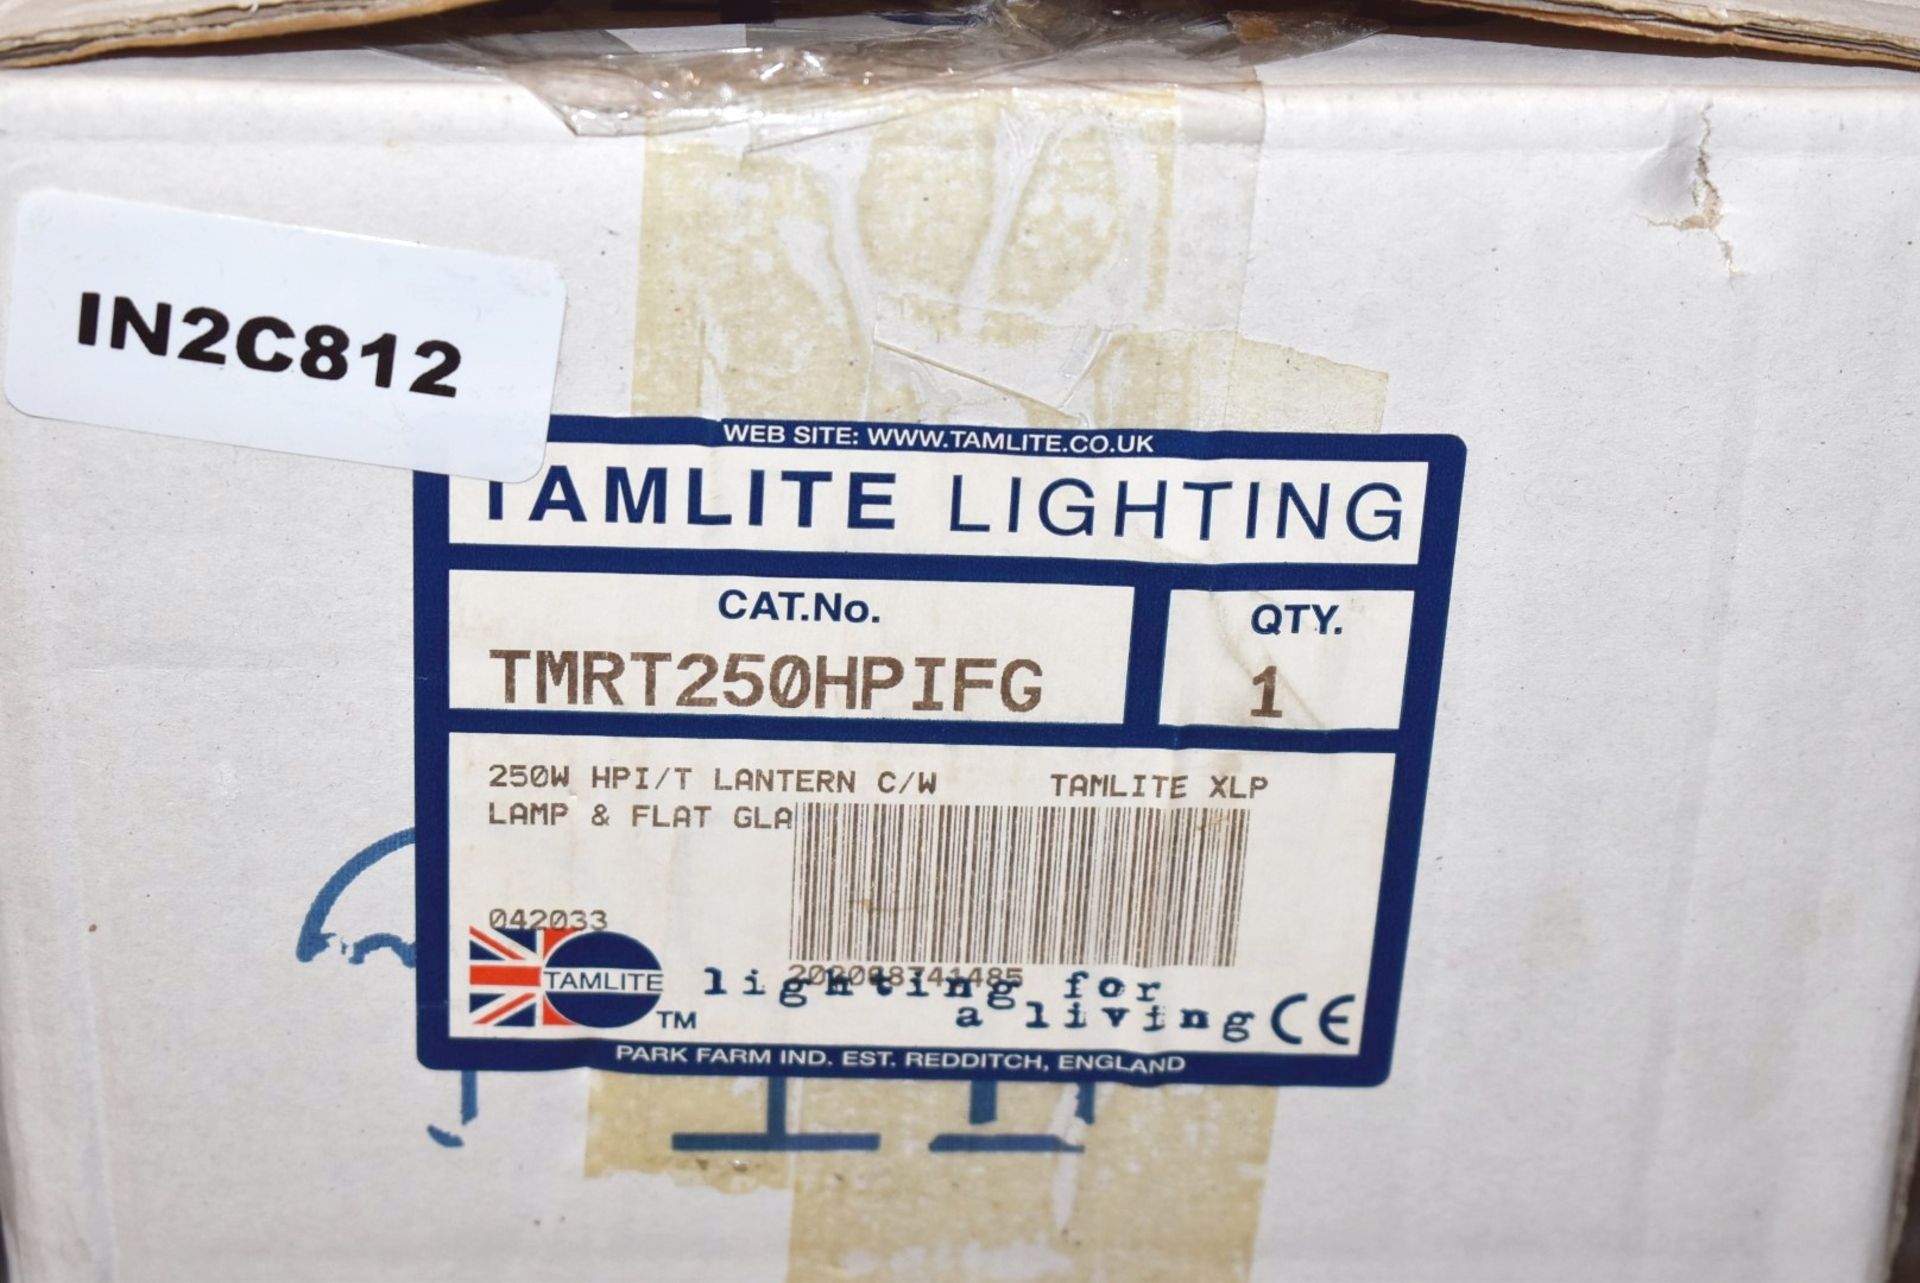 4 x Tamlite Lighting 250w Lantern - Lamp and Flat Gland - Model TMRT250HPIFG - New Boxed Stock - Image 3 of 5